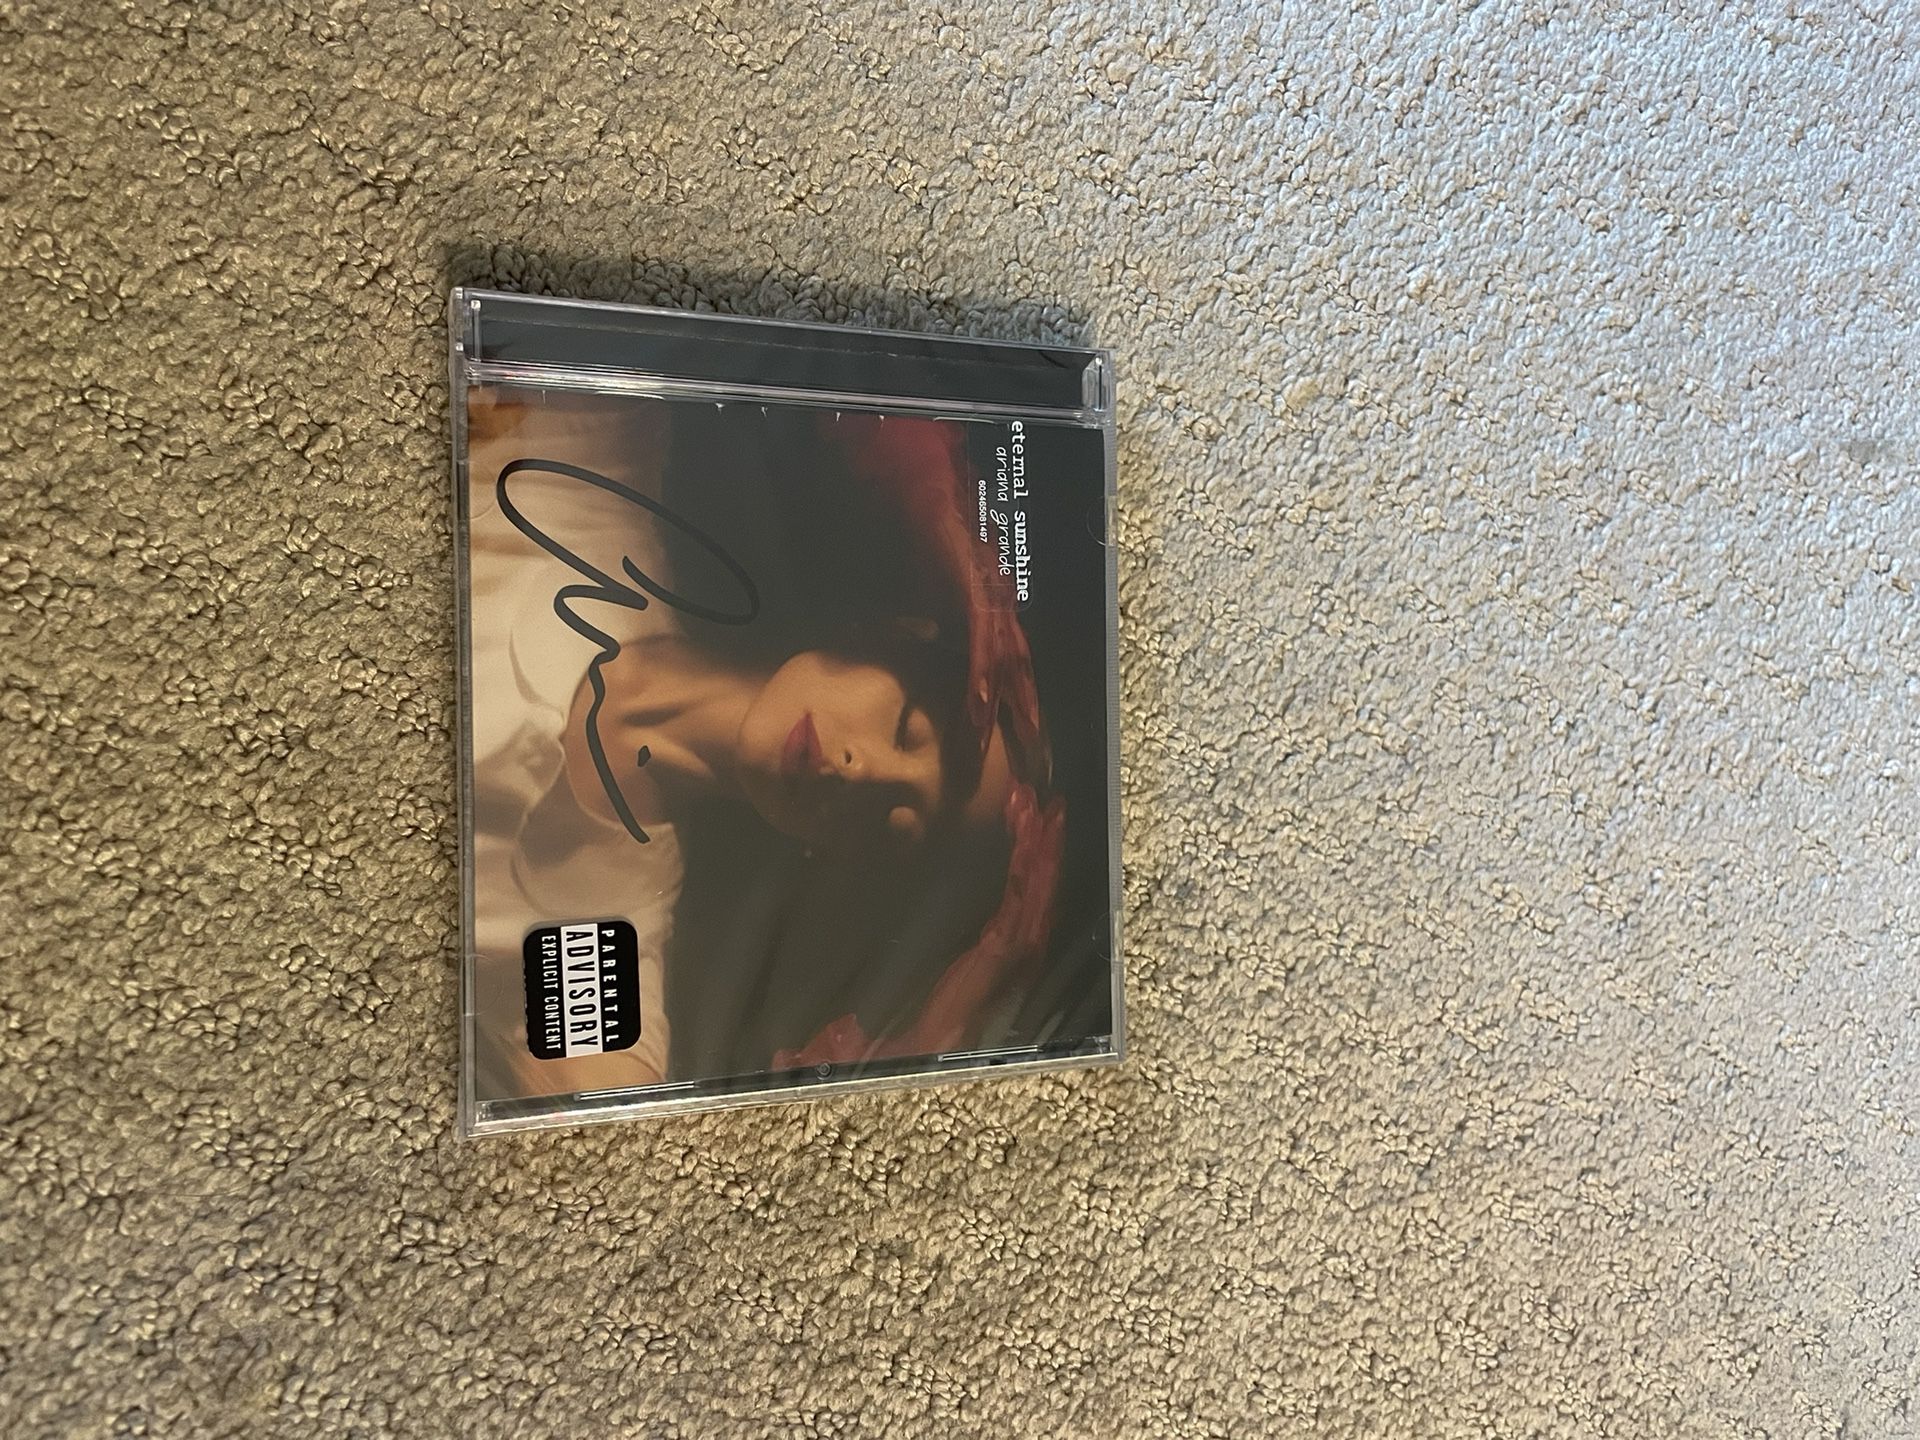 Ariana grande Signed And Sealed CD Eternal sunshine